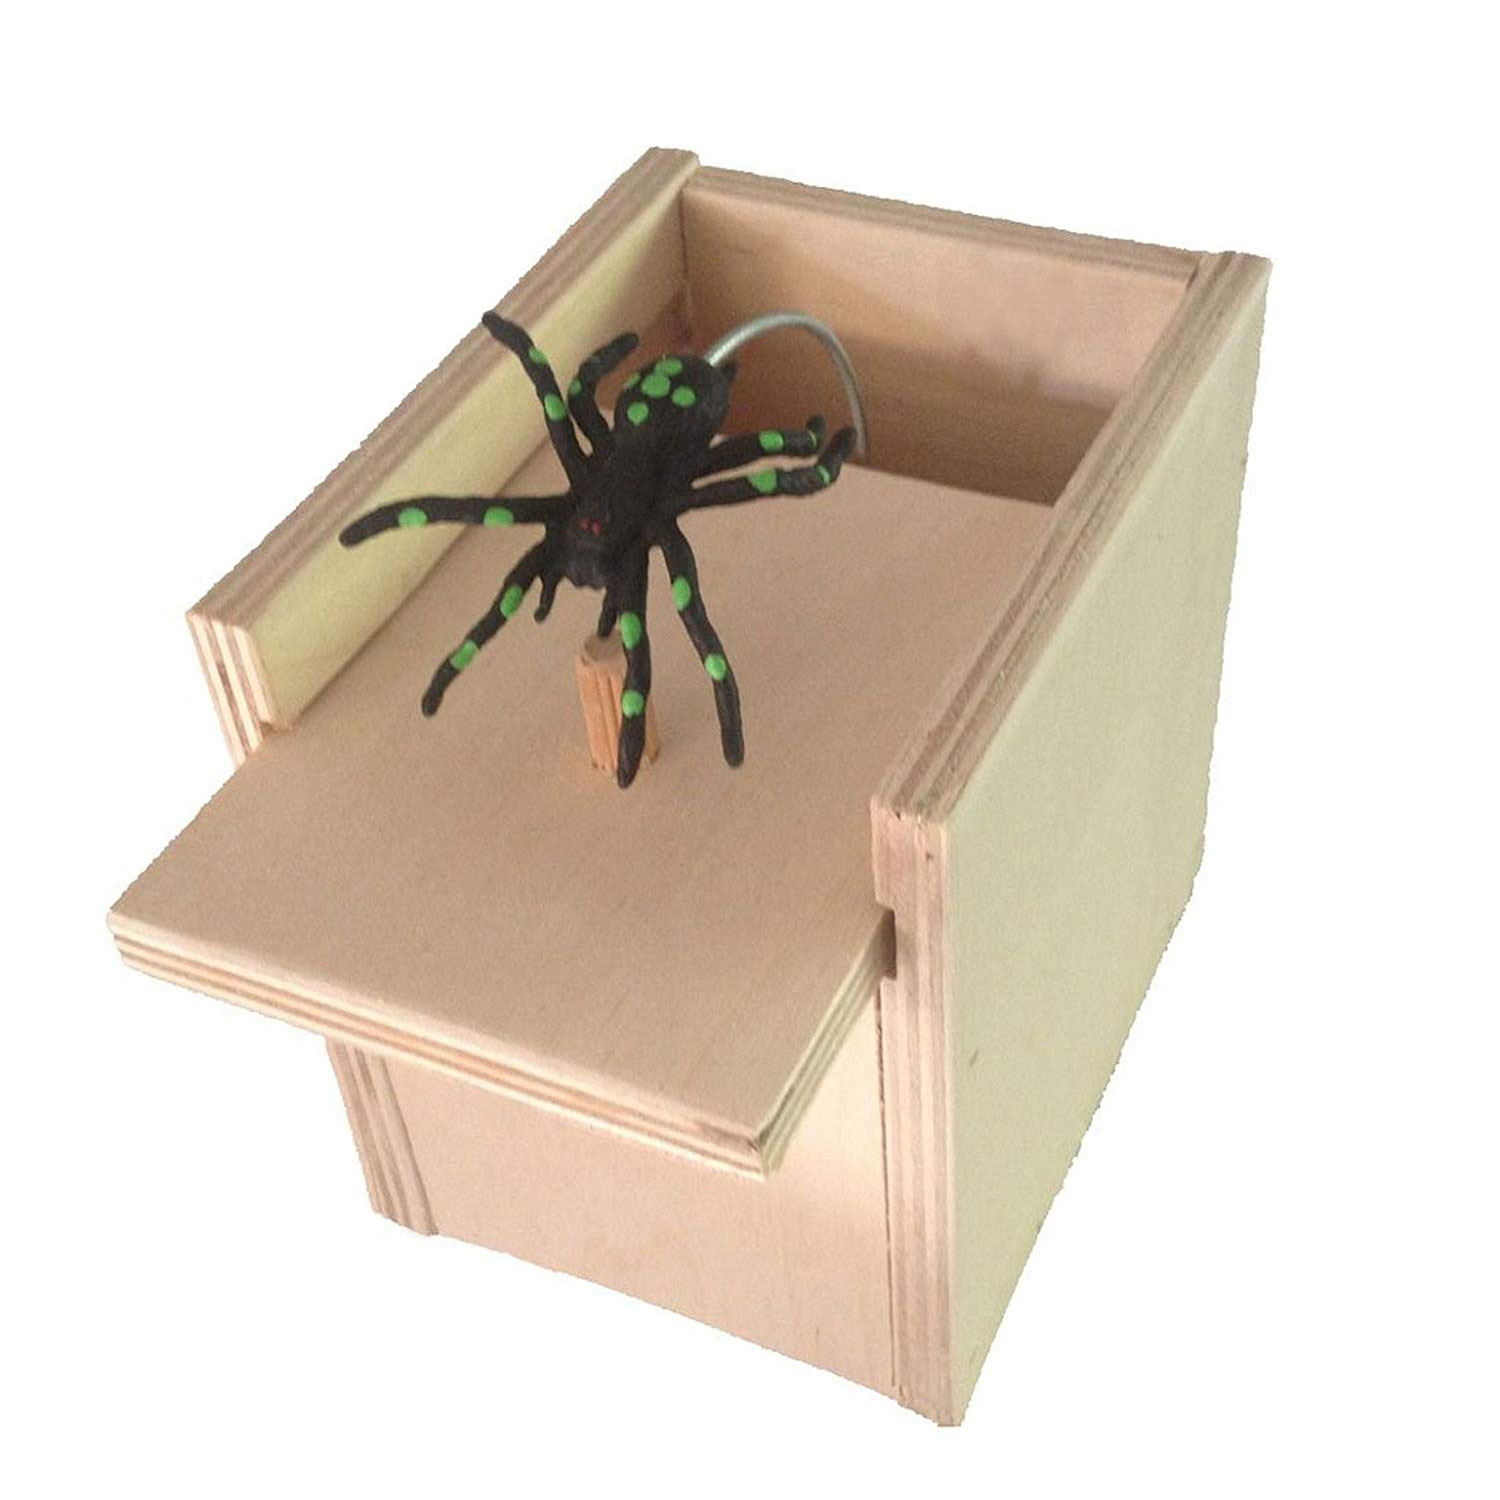 Funny Scare Box Wooden Prank Spider Hidden in Case Joke Gag Toy Halloween Gif~GQ